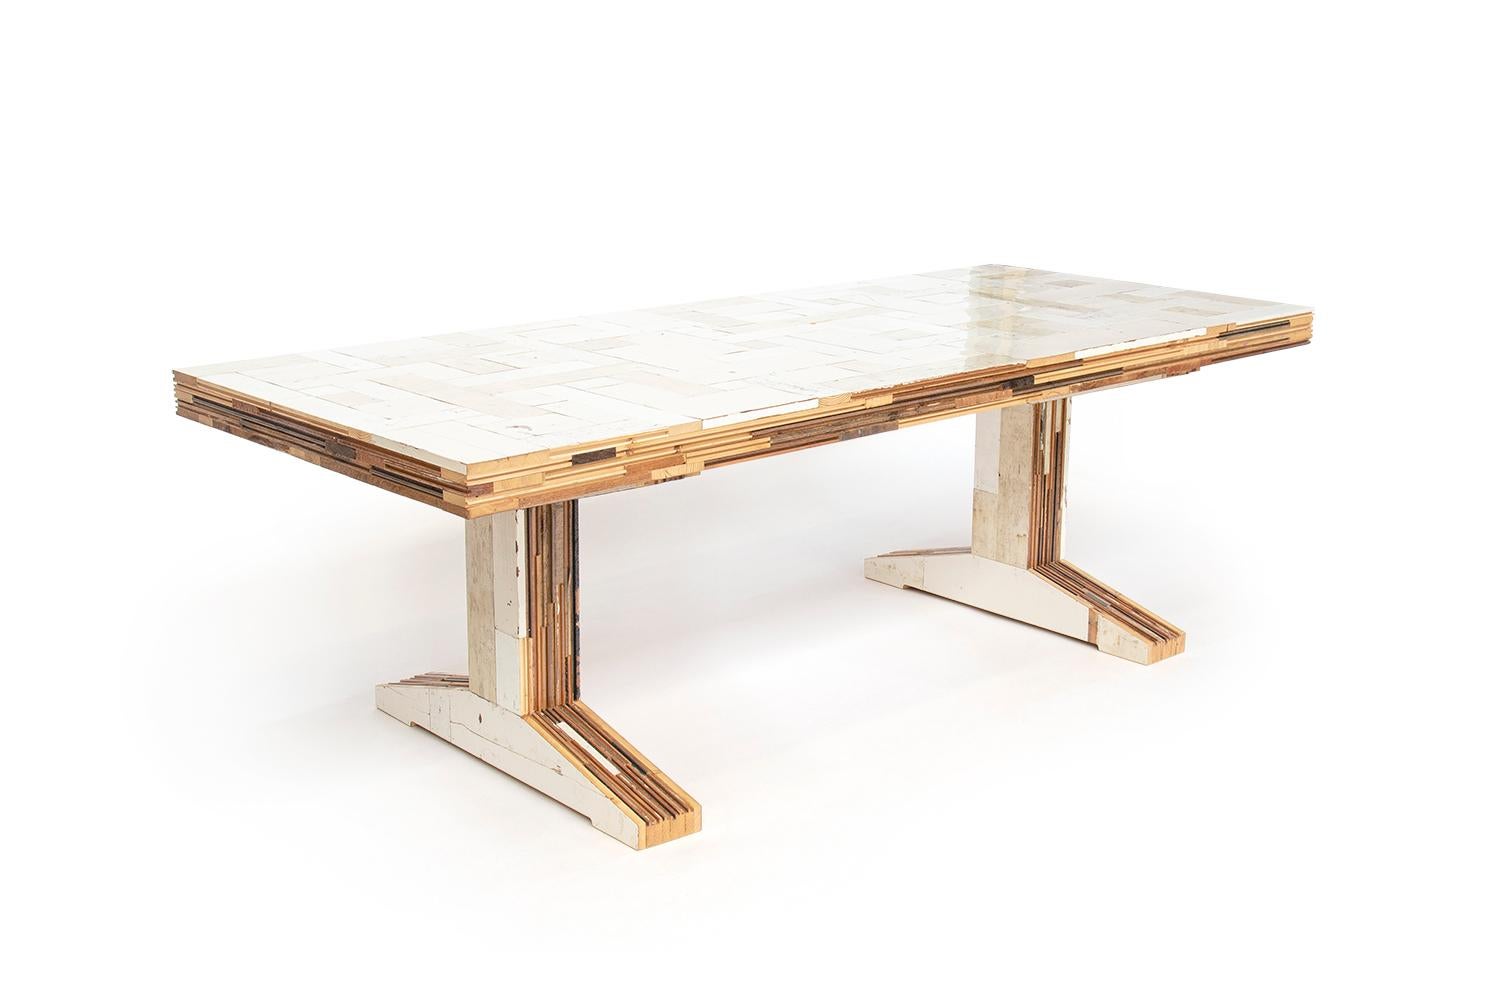 Modern Wooden Dining Table, Waste Table in Scrapwood by Piet Hein Eek For Sale 1